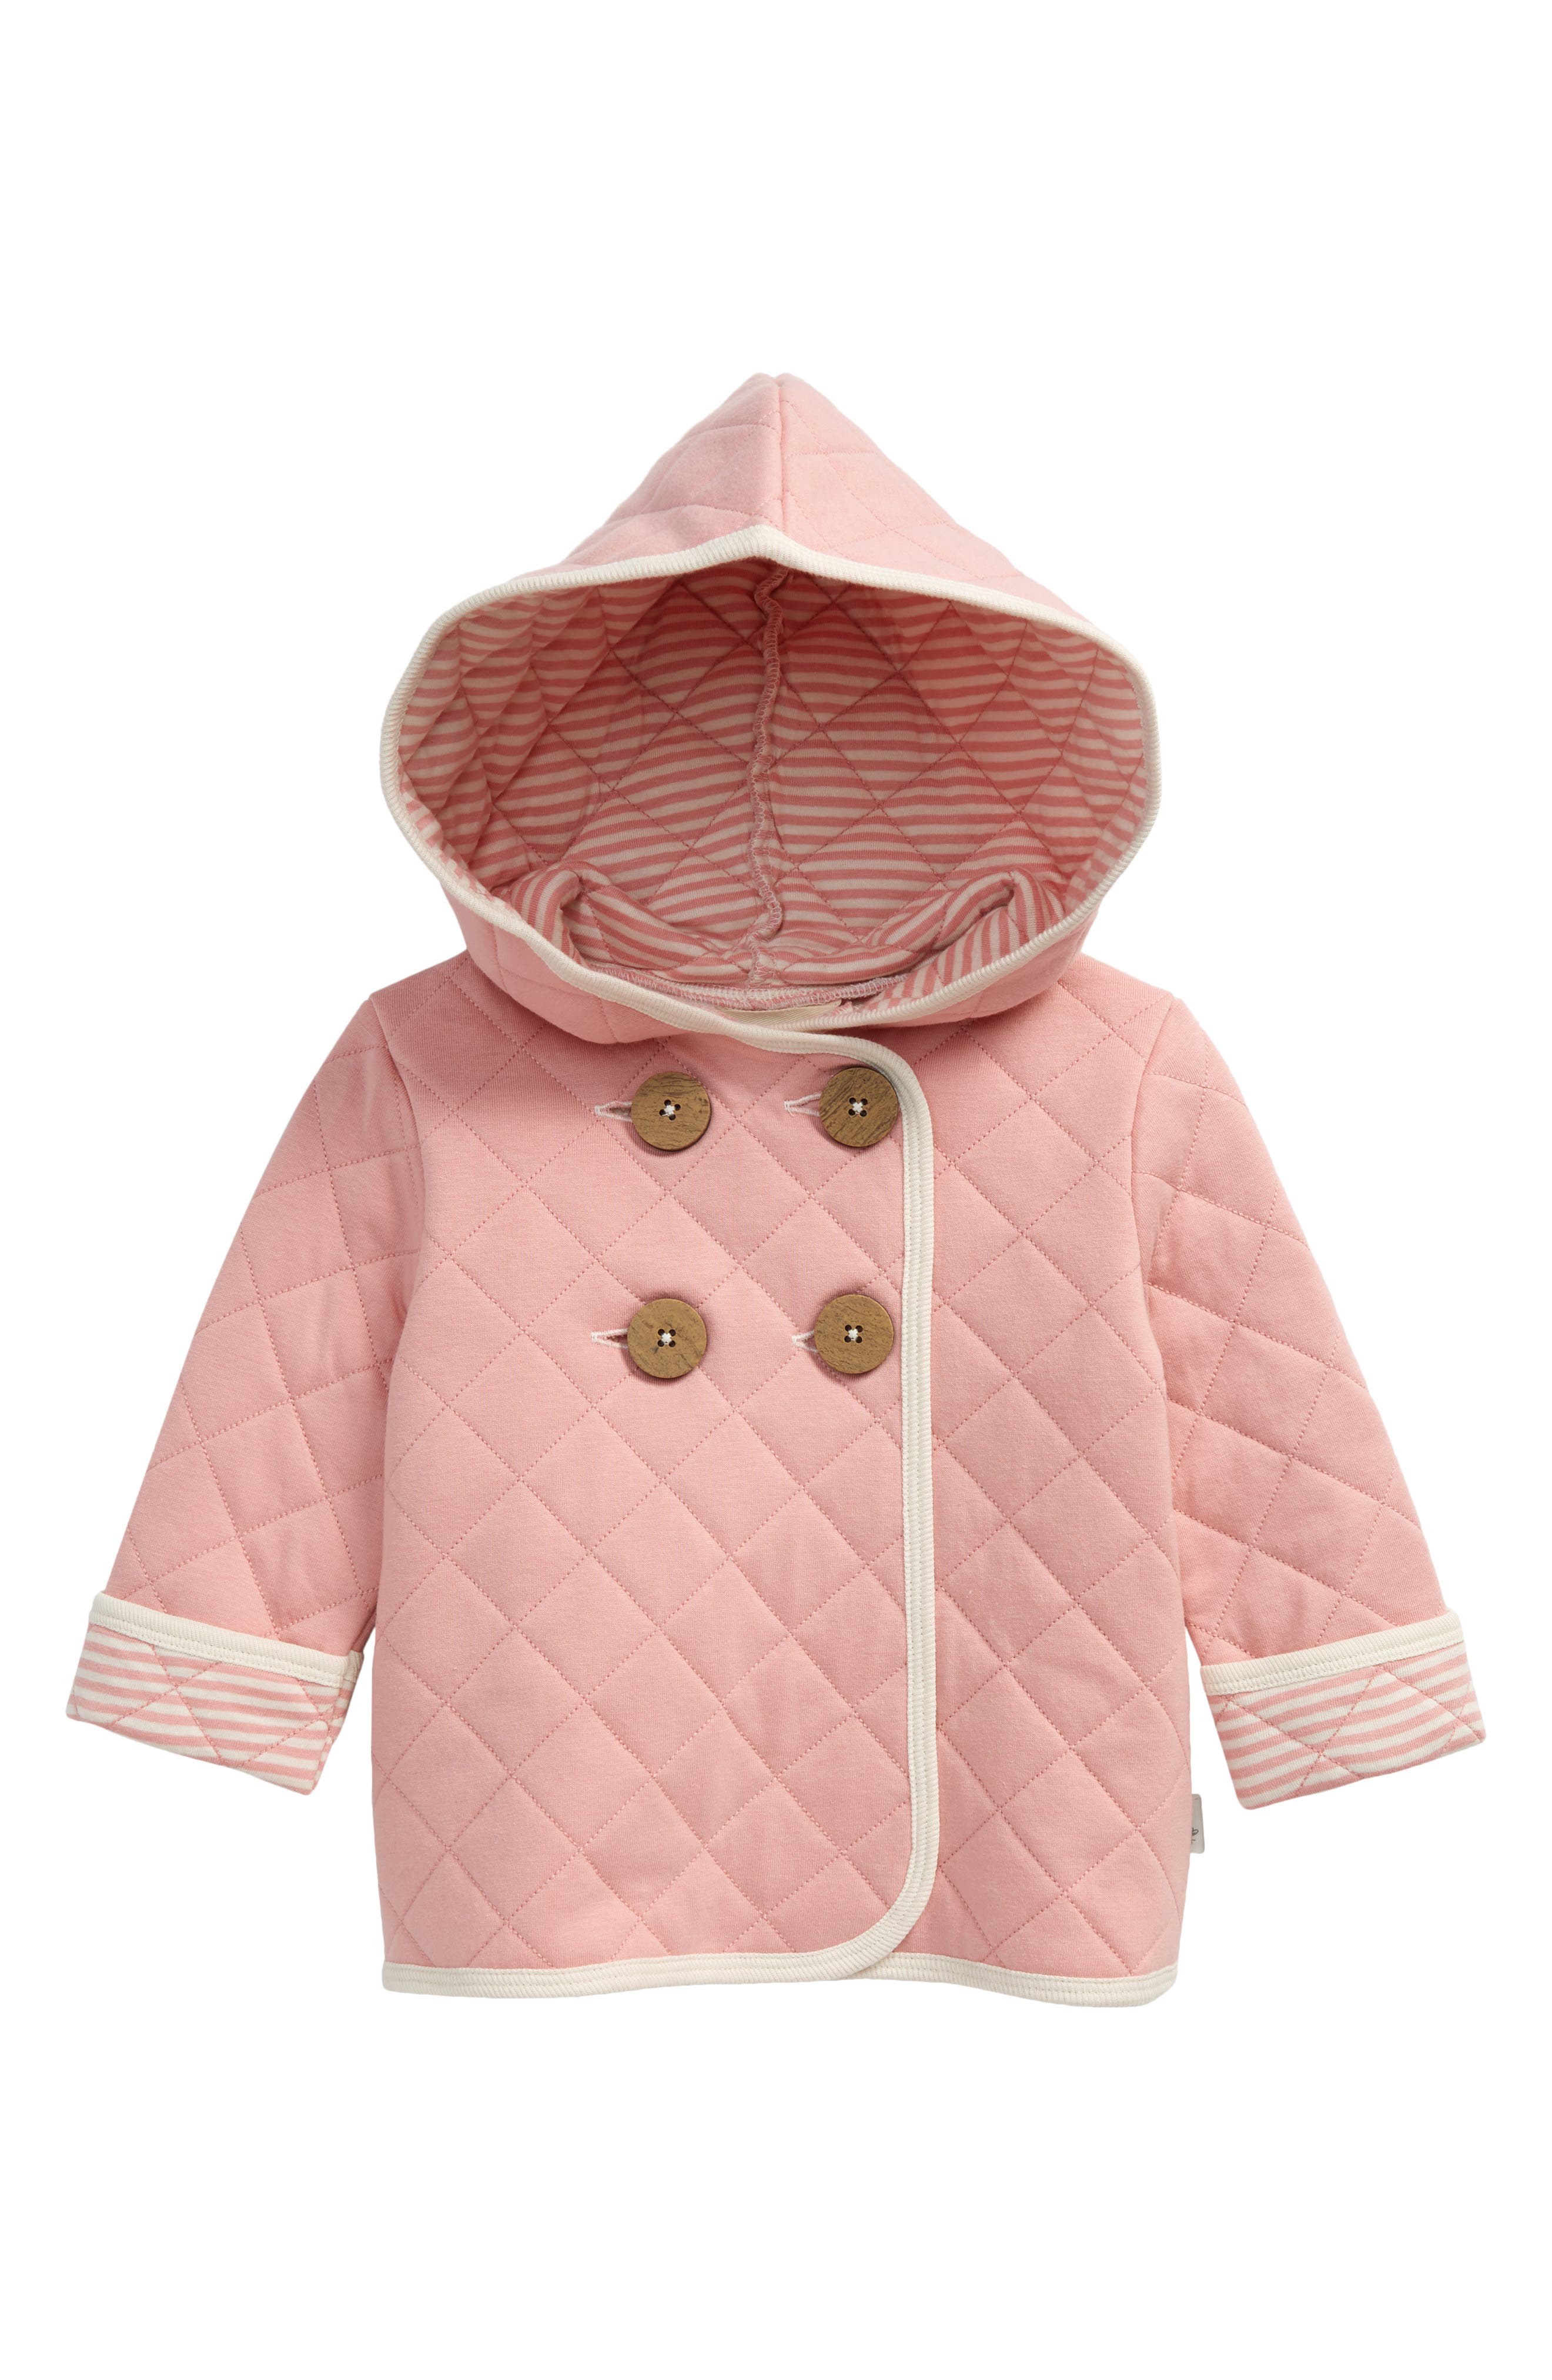 nordstrom baby jacket